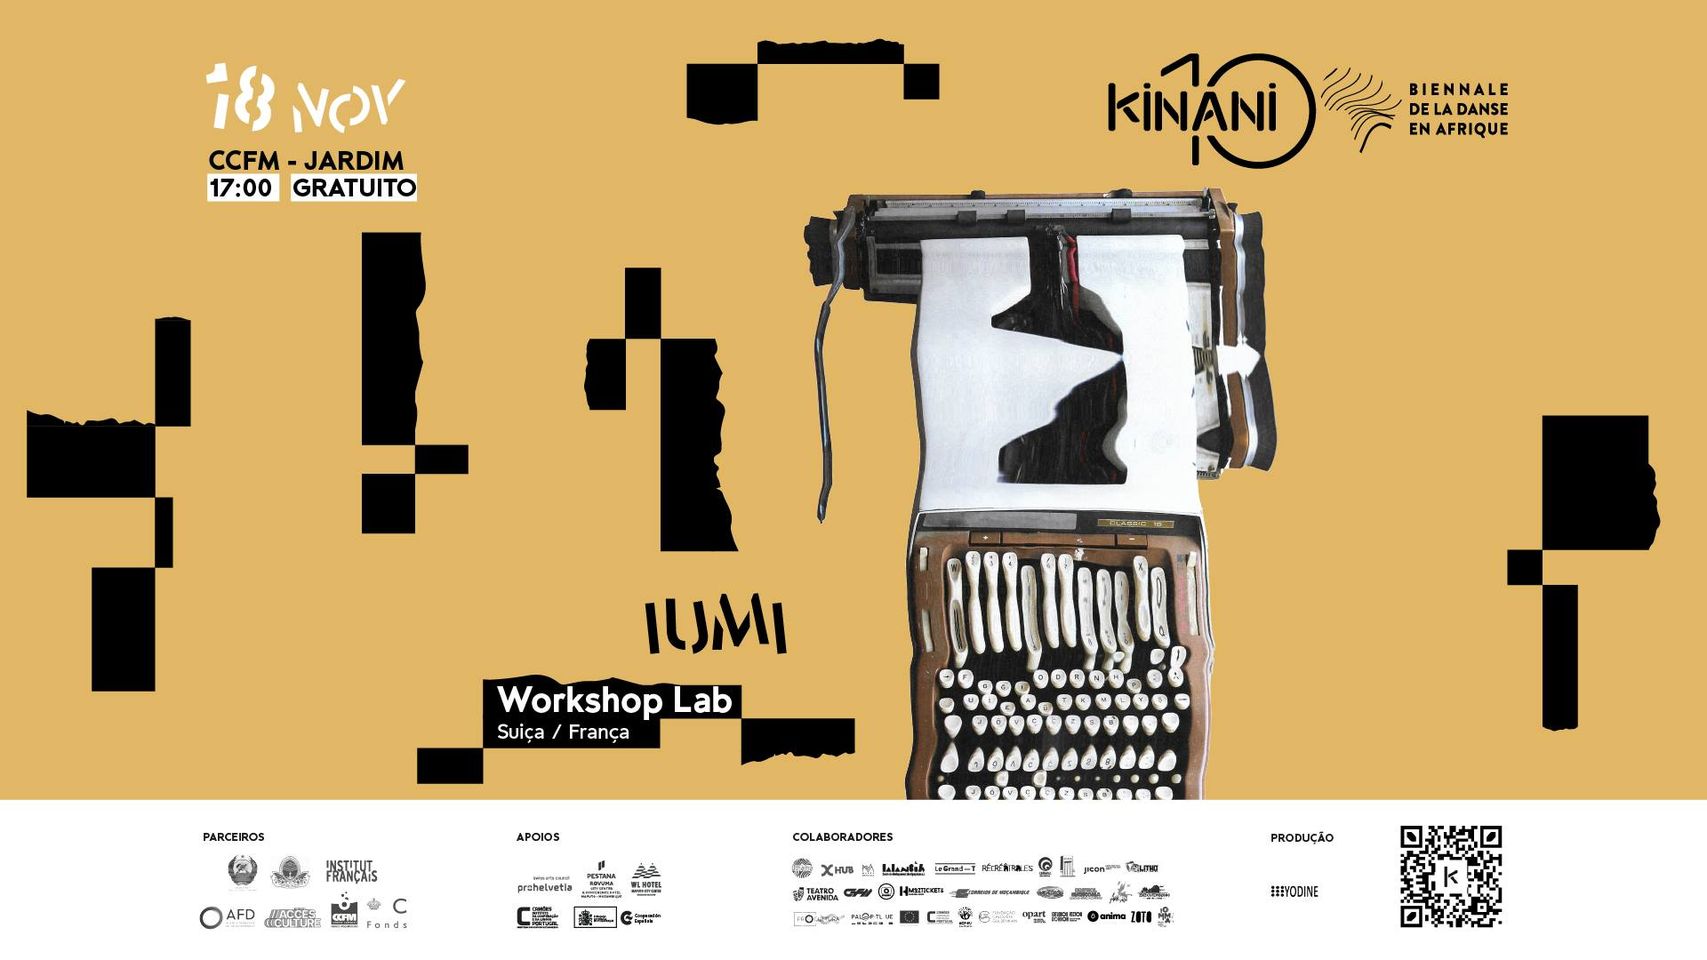 KINANI - Biennale de la Danse en Afrique | IUMI - Worskhop Lab